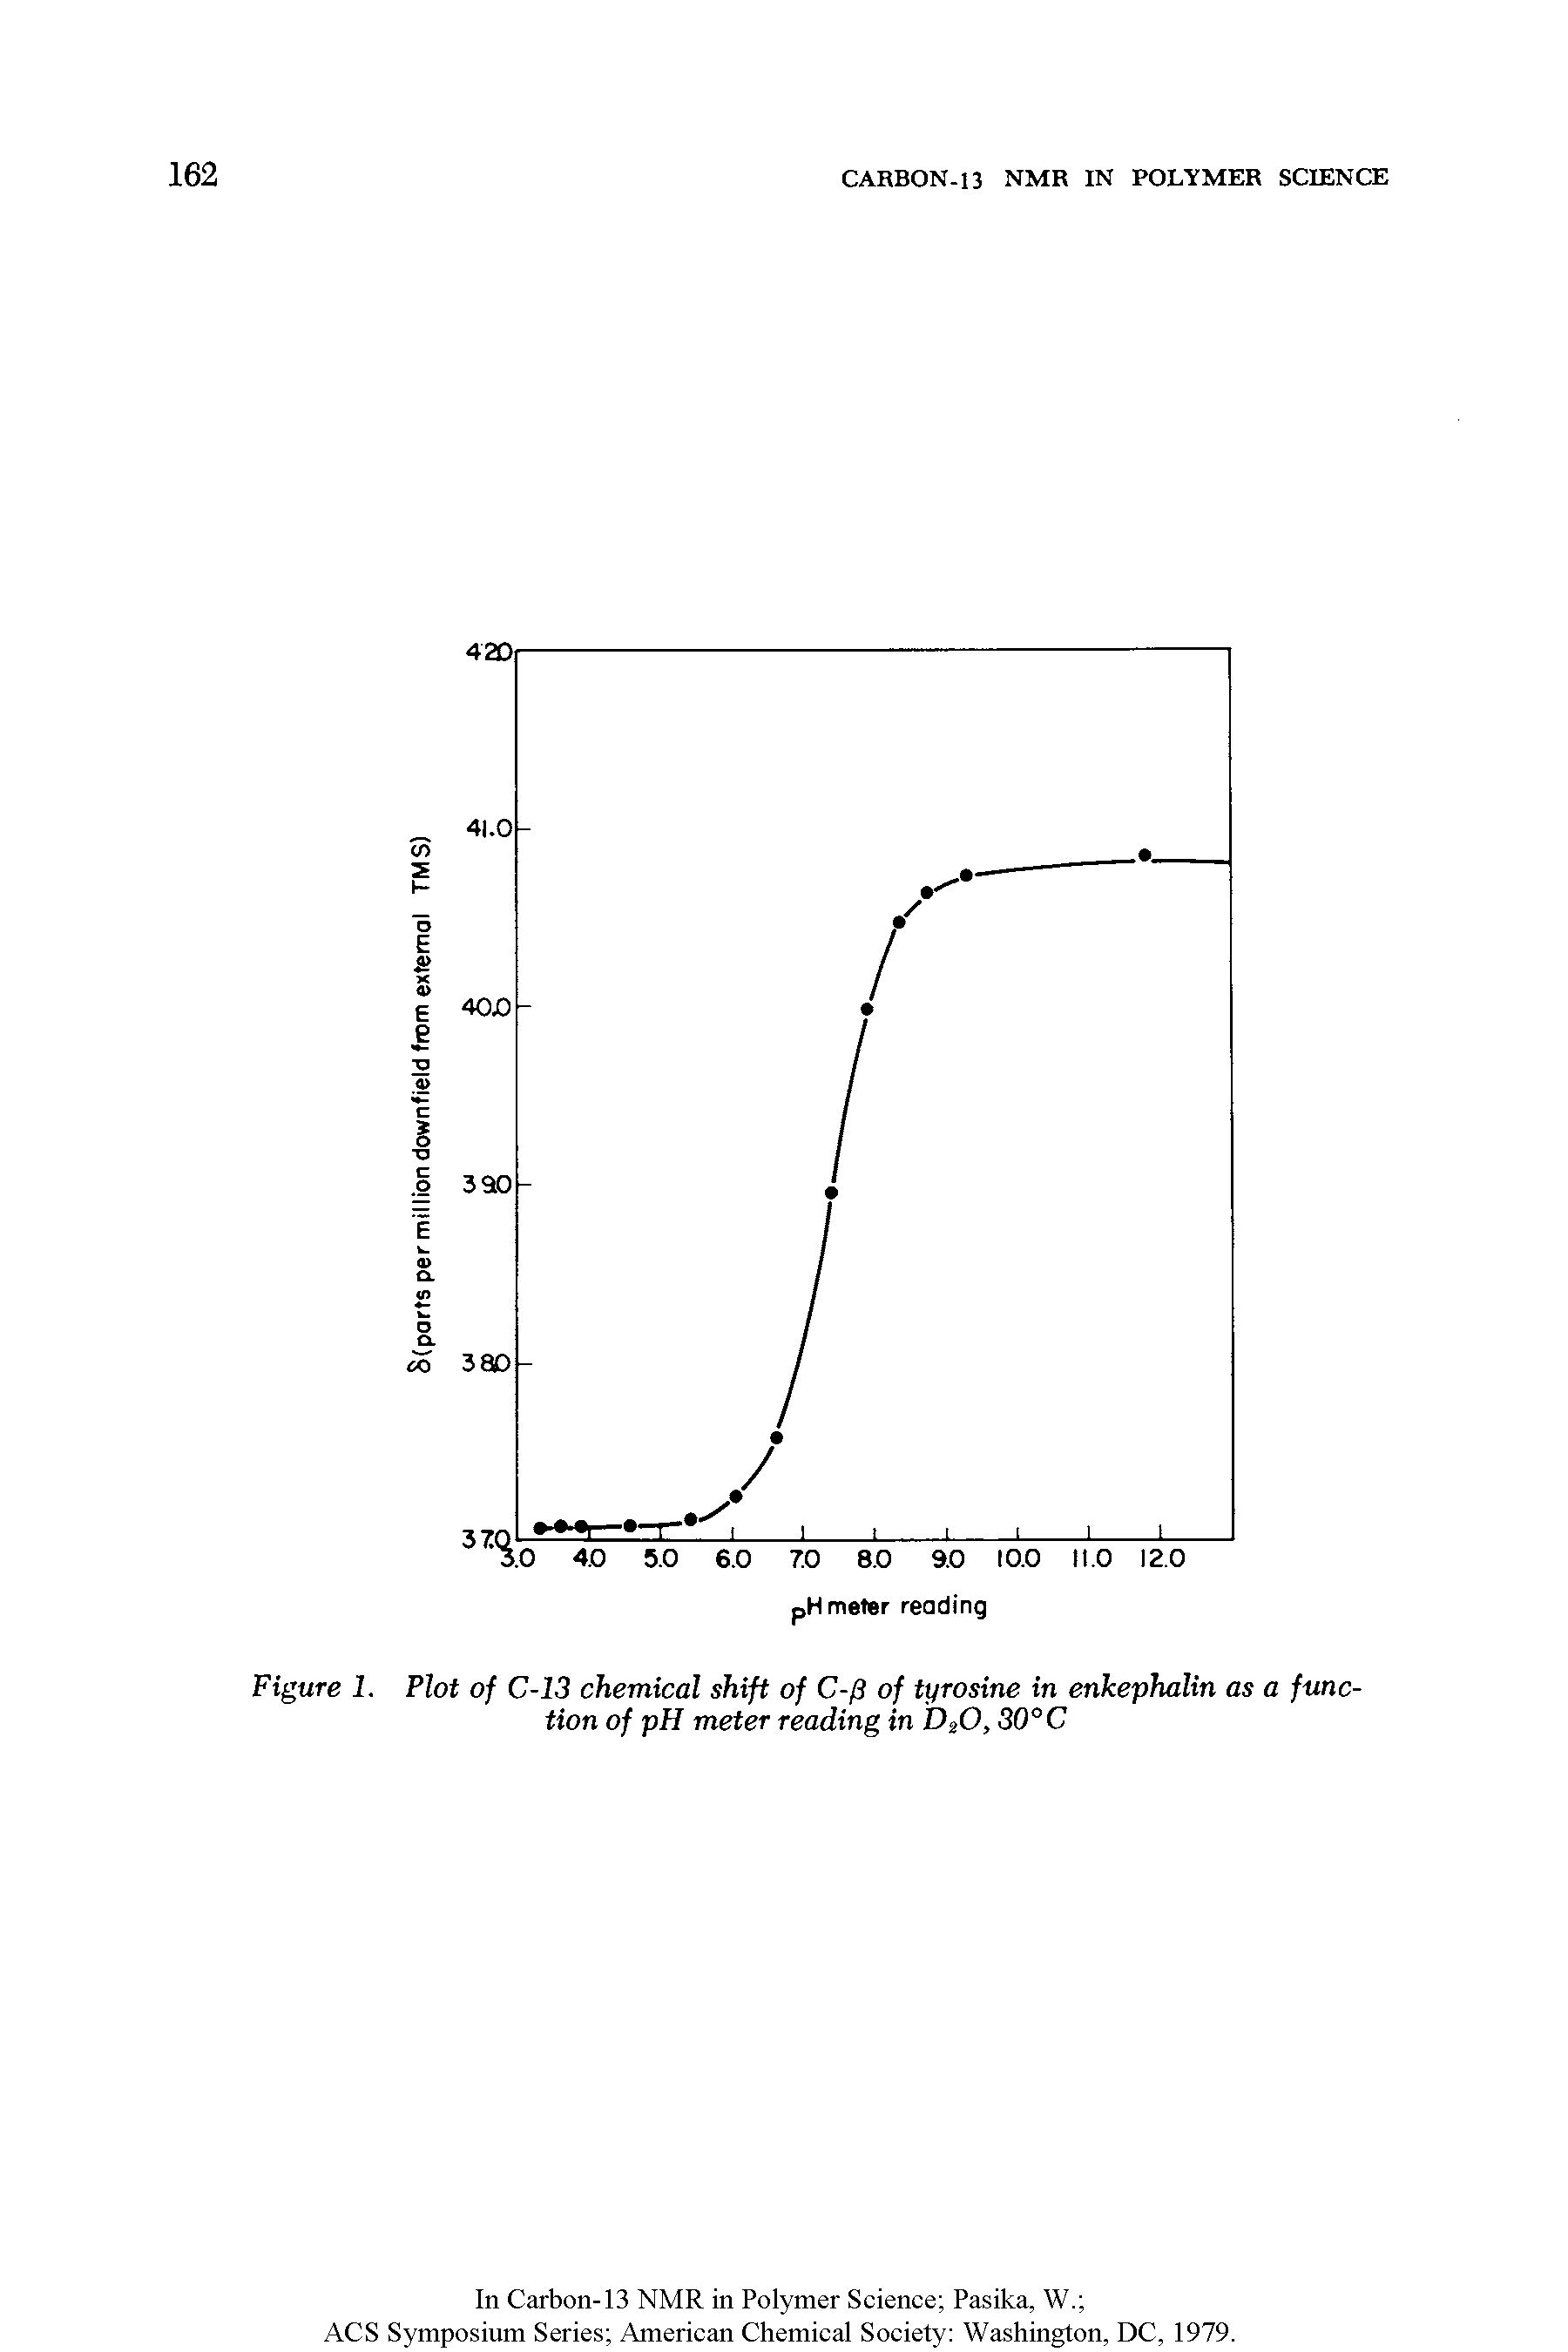 Figure 1. Flat of C-13 chemical shift of C-/3 of tyrosine in enkephalin as a function of pH meter reading in D O, 30° C...